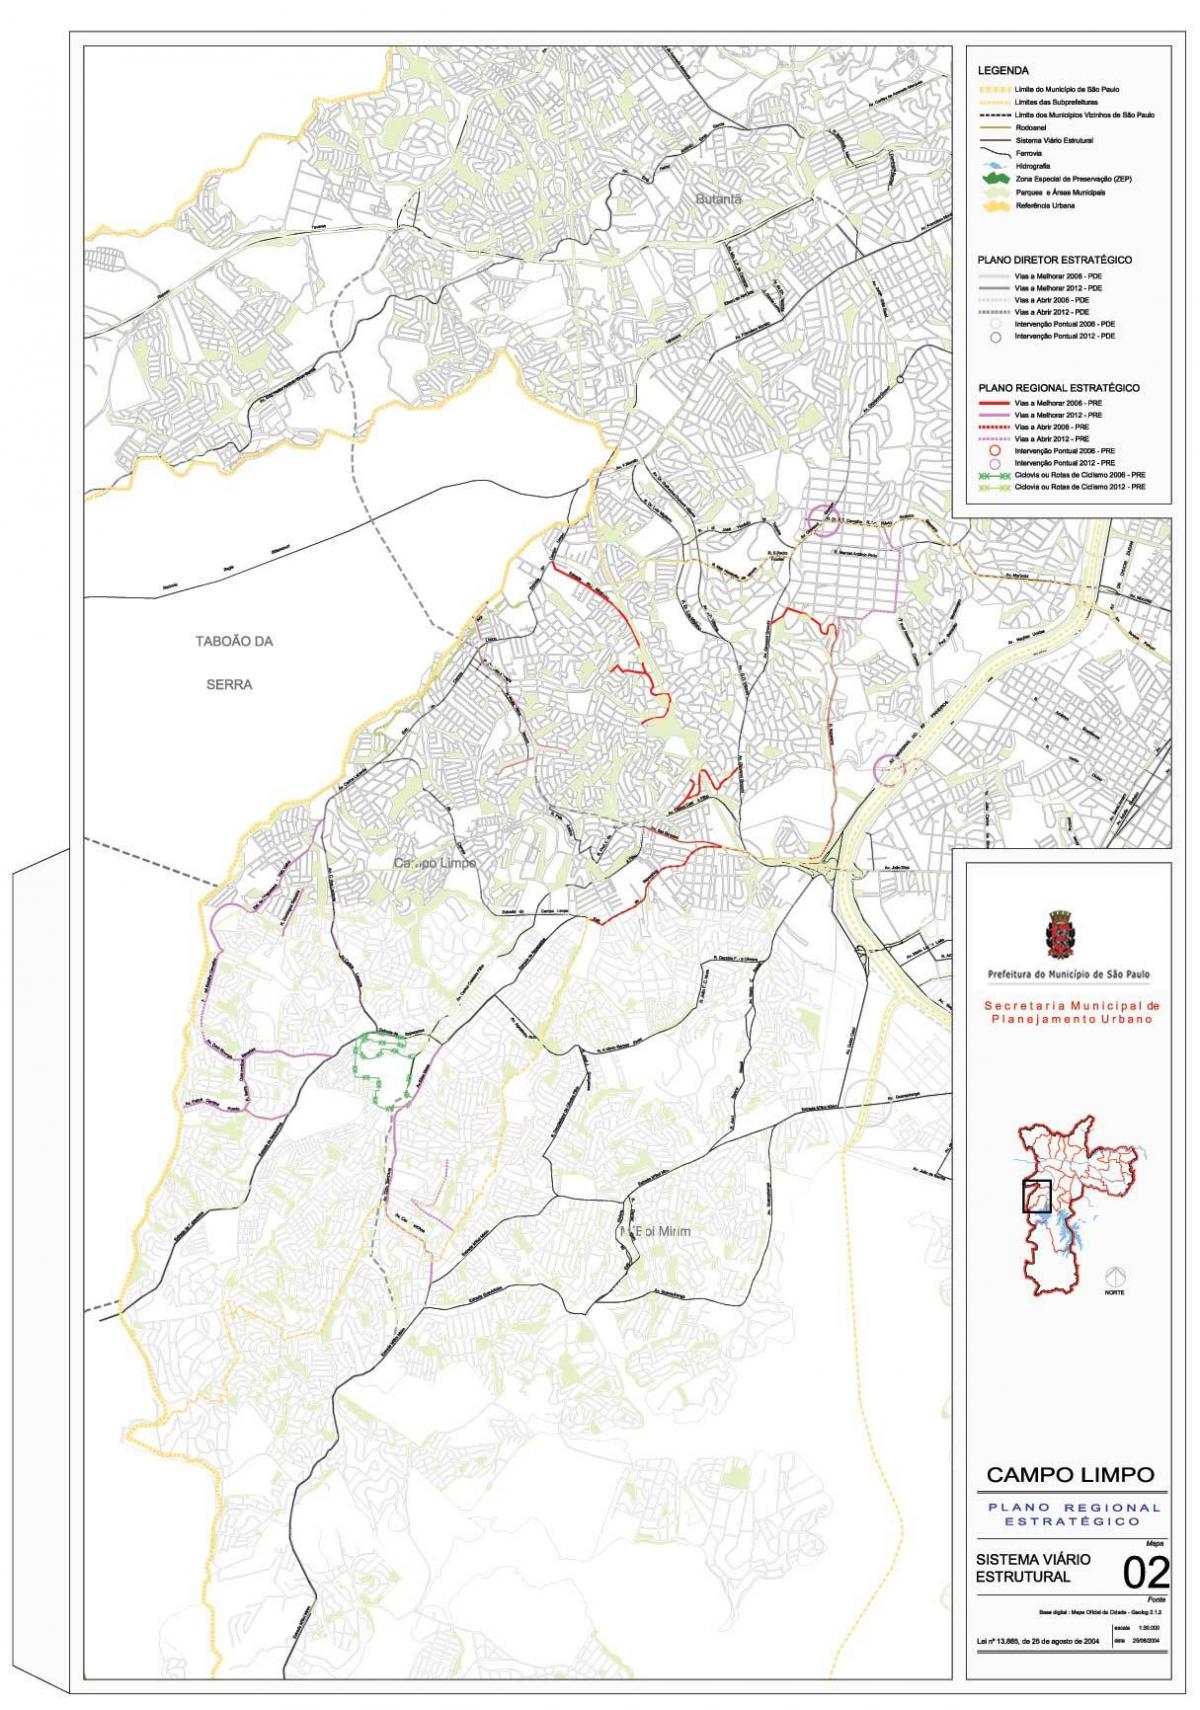 Mapa Campo Limpo São Paulo - Errepideak